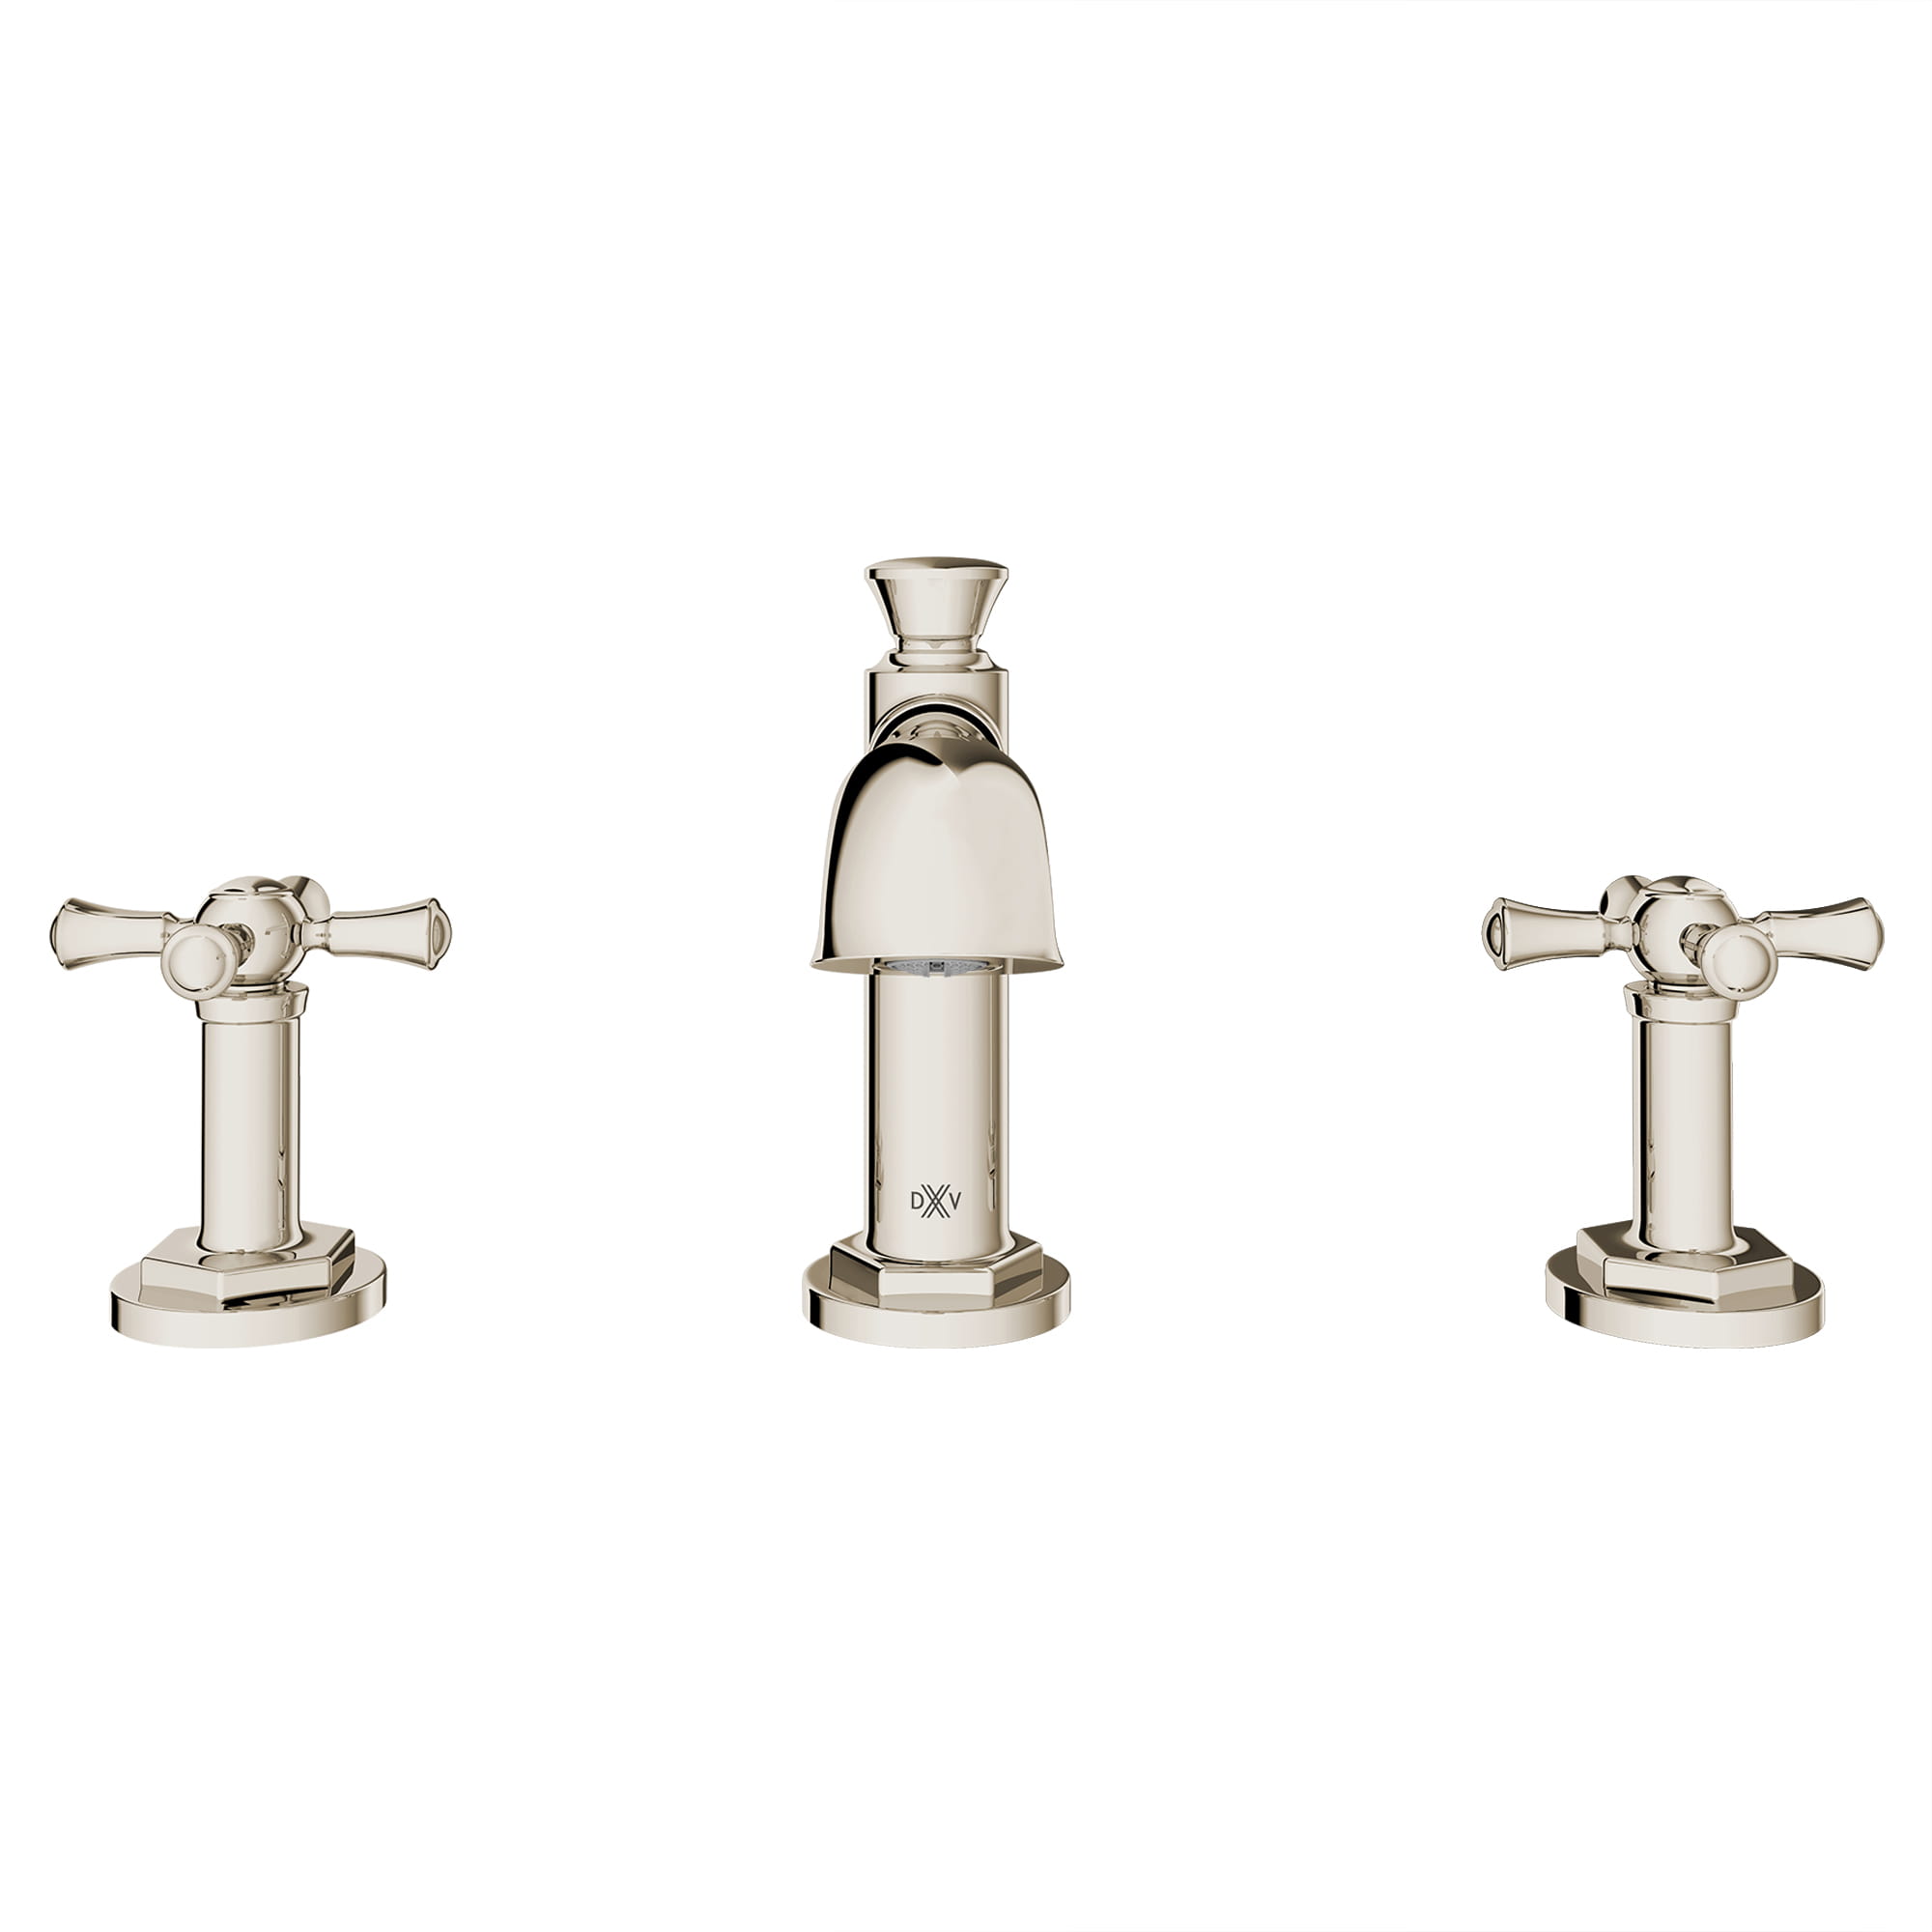 Oak Hill 2-Handle Widespread Bathroom Faucet with Cross Handles